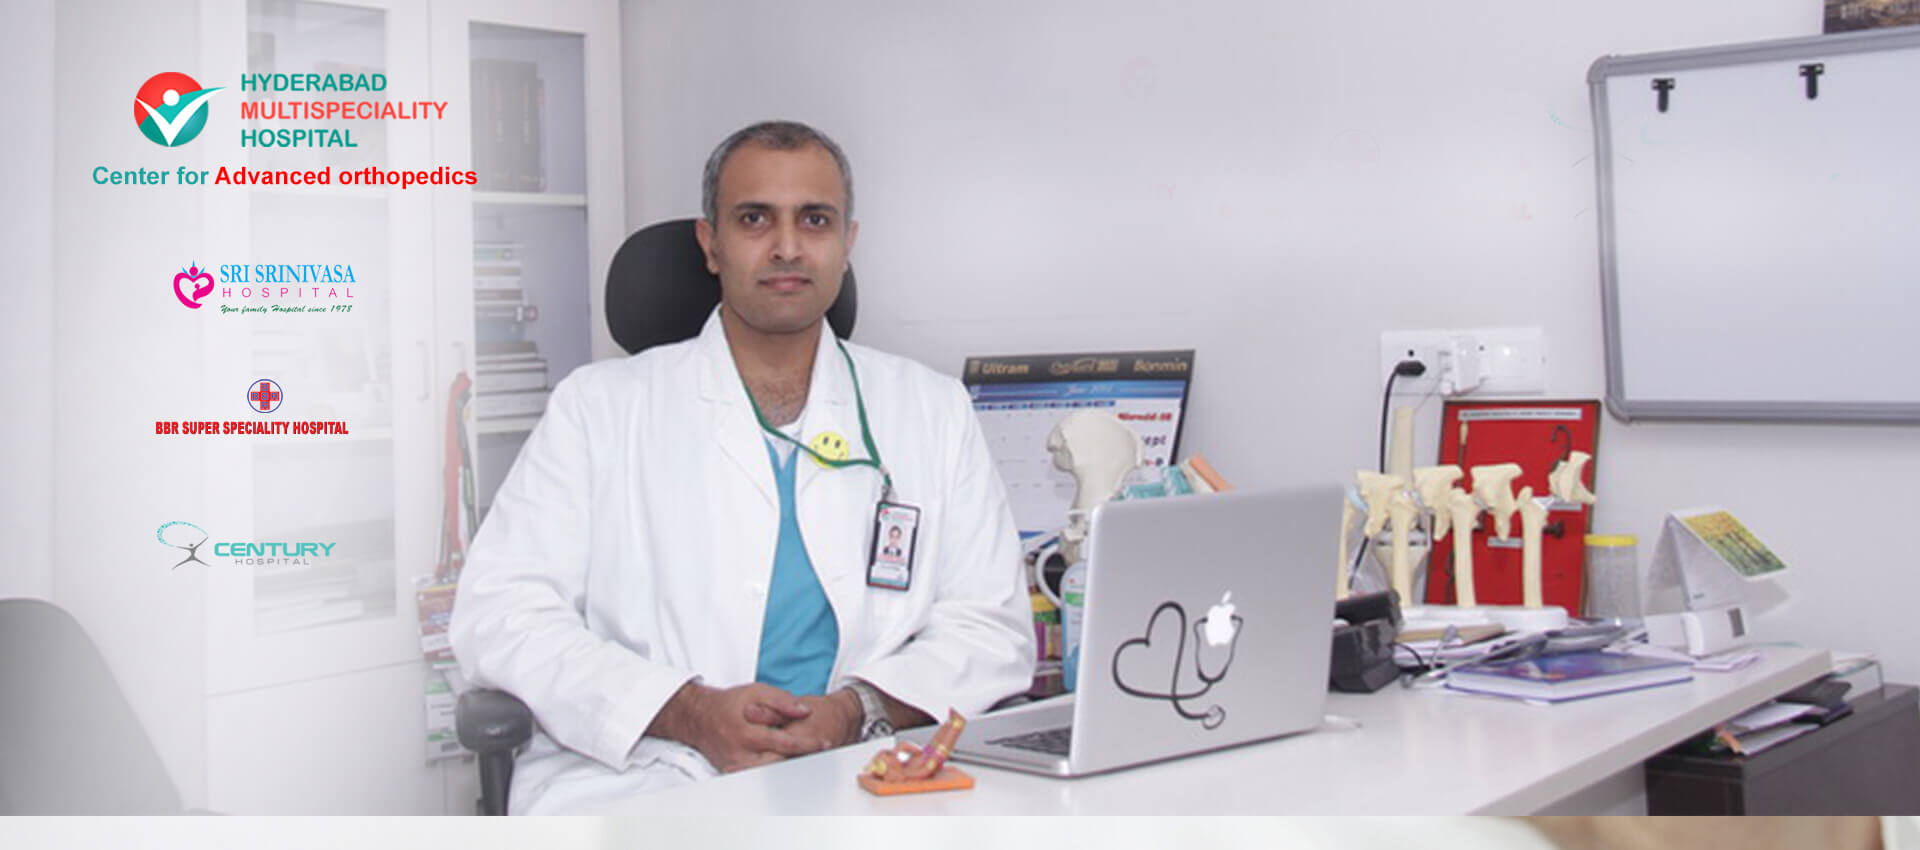 Dr Pradeep Reddy M Your Orthopedic Surgeon in Hyderabad